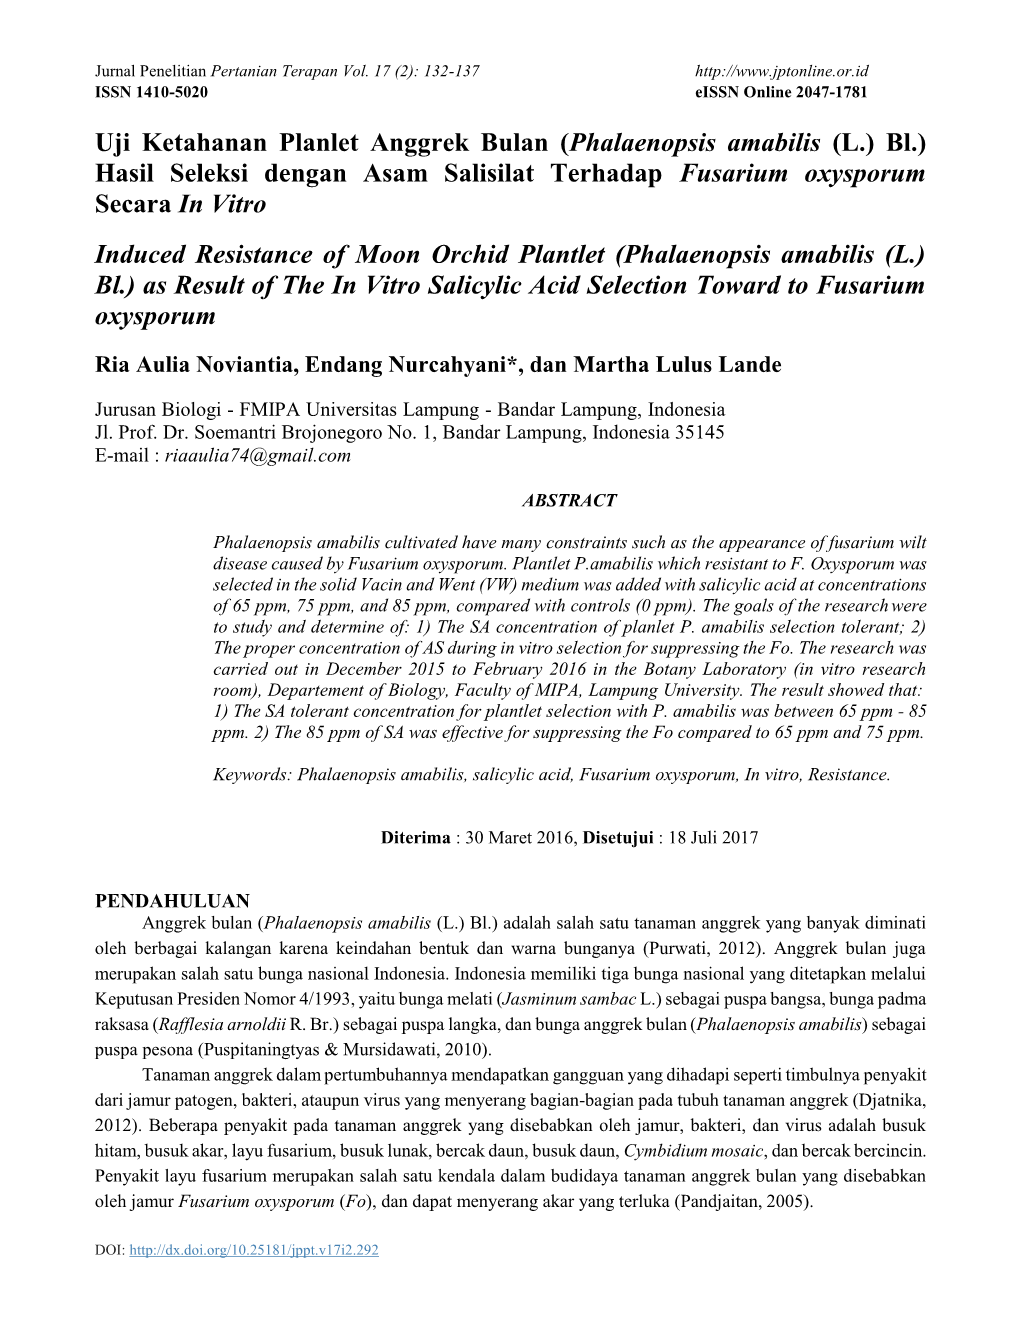 Uji Ketahanan Planlet Anggrek Bulan (Phalaenopsis Amabilis (L.) Bl.) Hasil Seleksi Dengan Asam Salisilat Terhadap Fusarium Oxysp